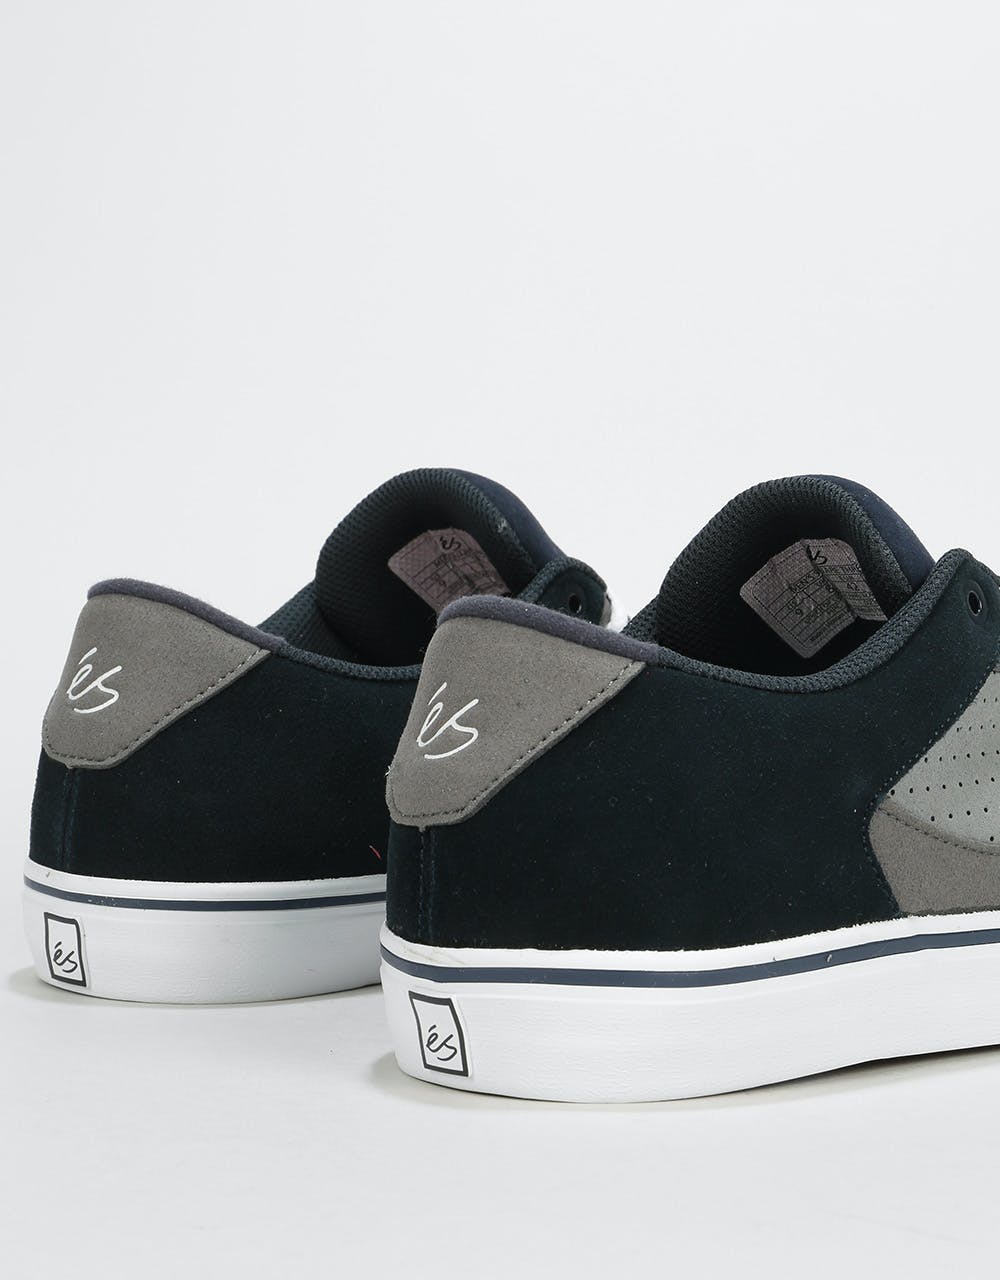 éS Square Three Skate Shoes - Navy/Grey